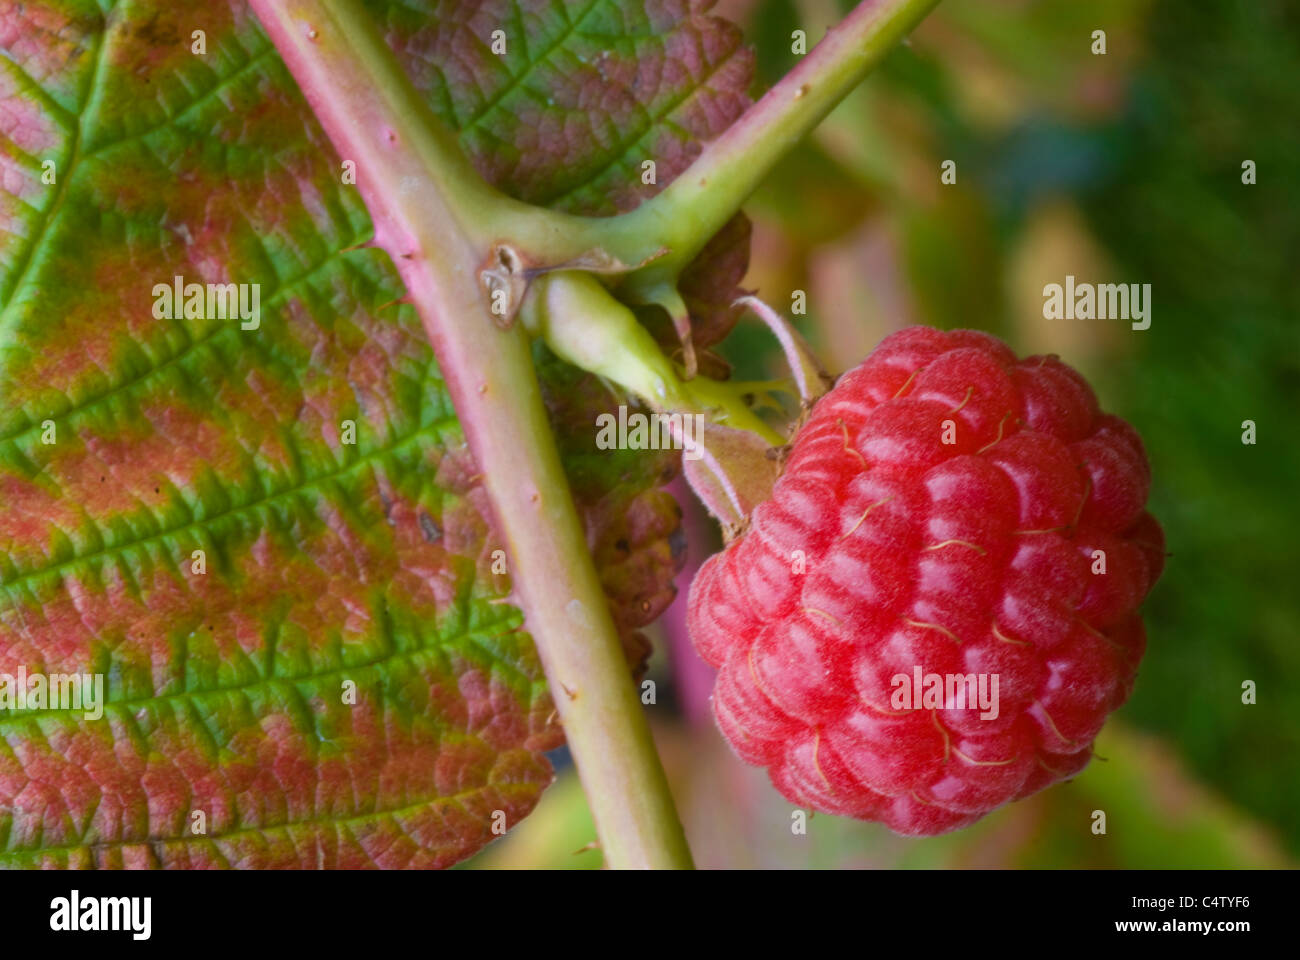 Red raspberry and leaf (Rubus idaeus) in autumn Stock Photo